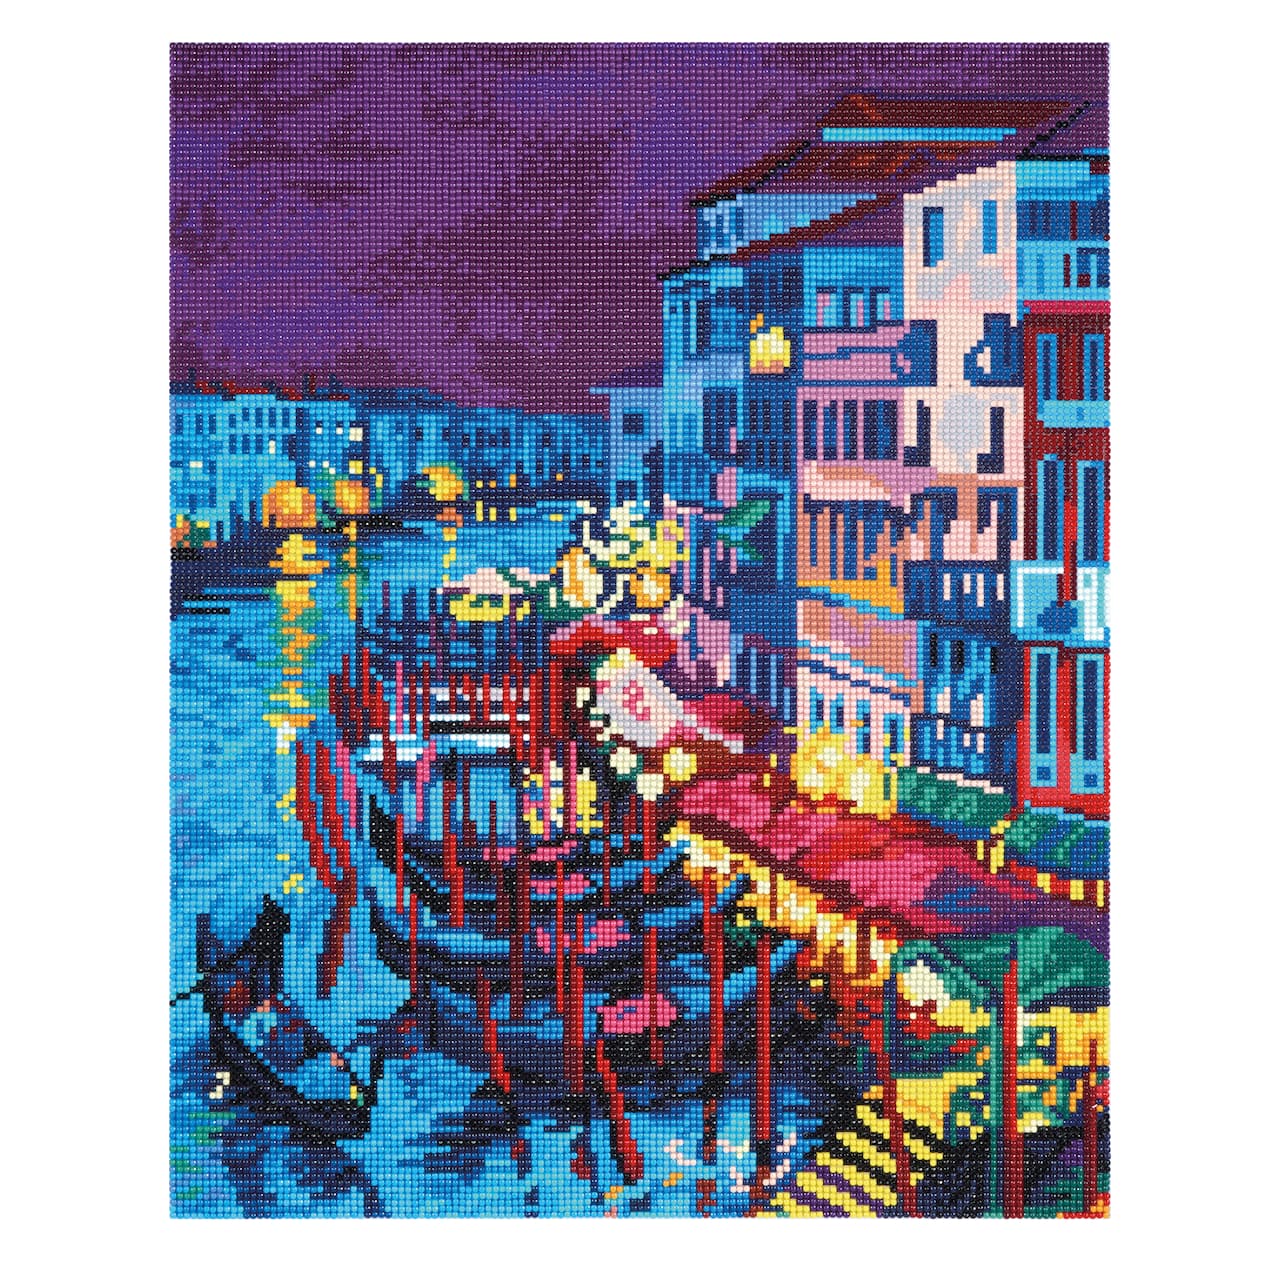 Venice at Night Painting Diamond Art Kit by Make Market®